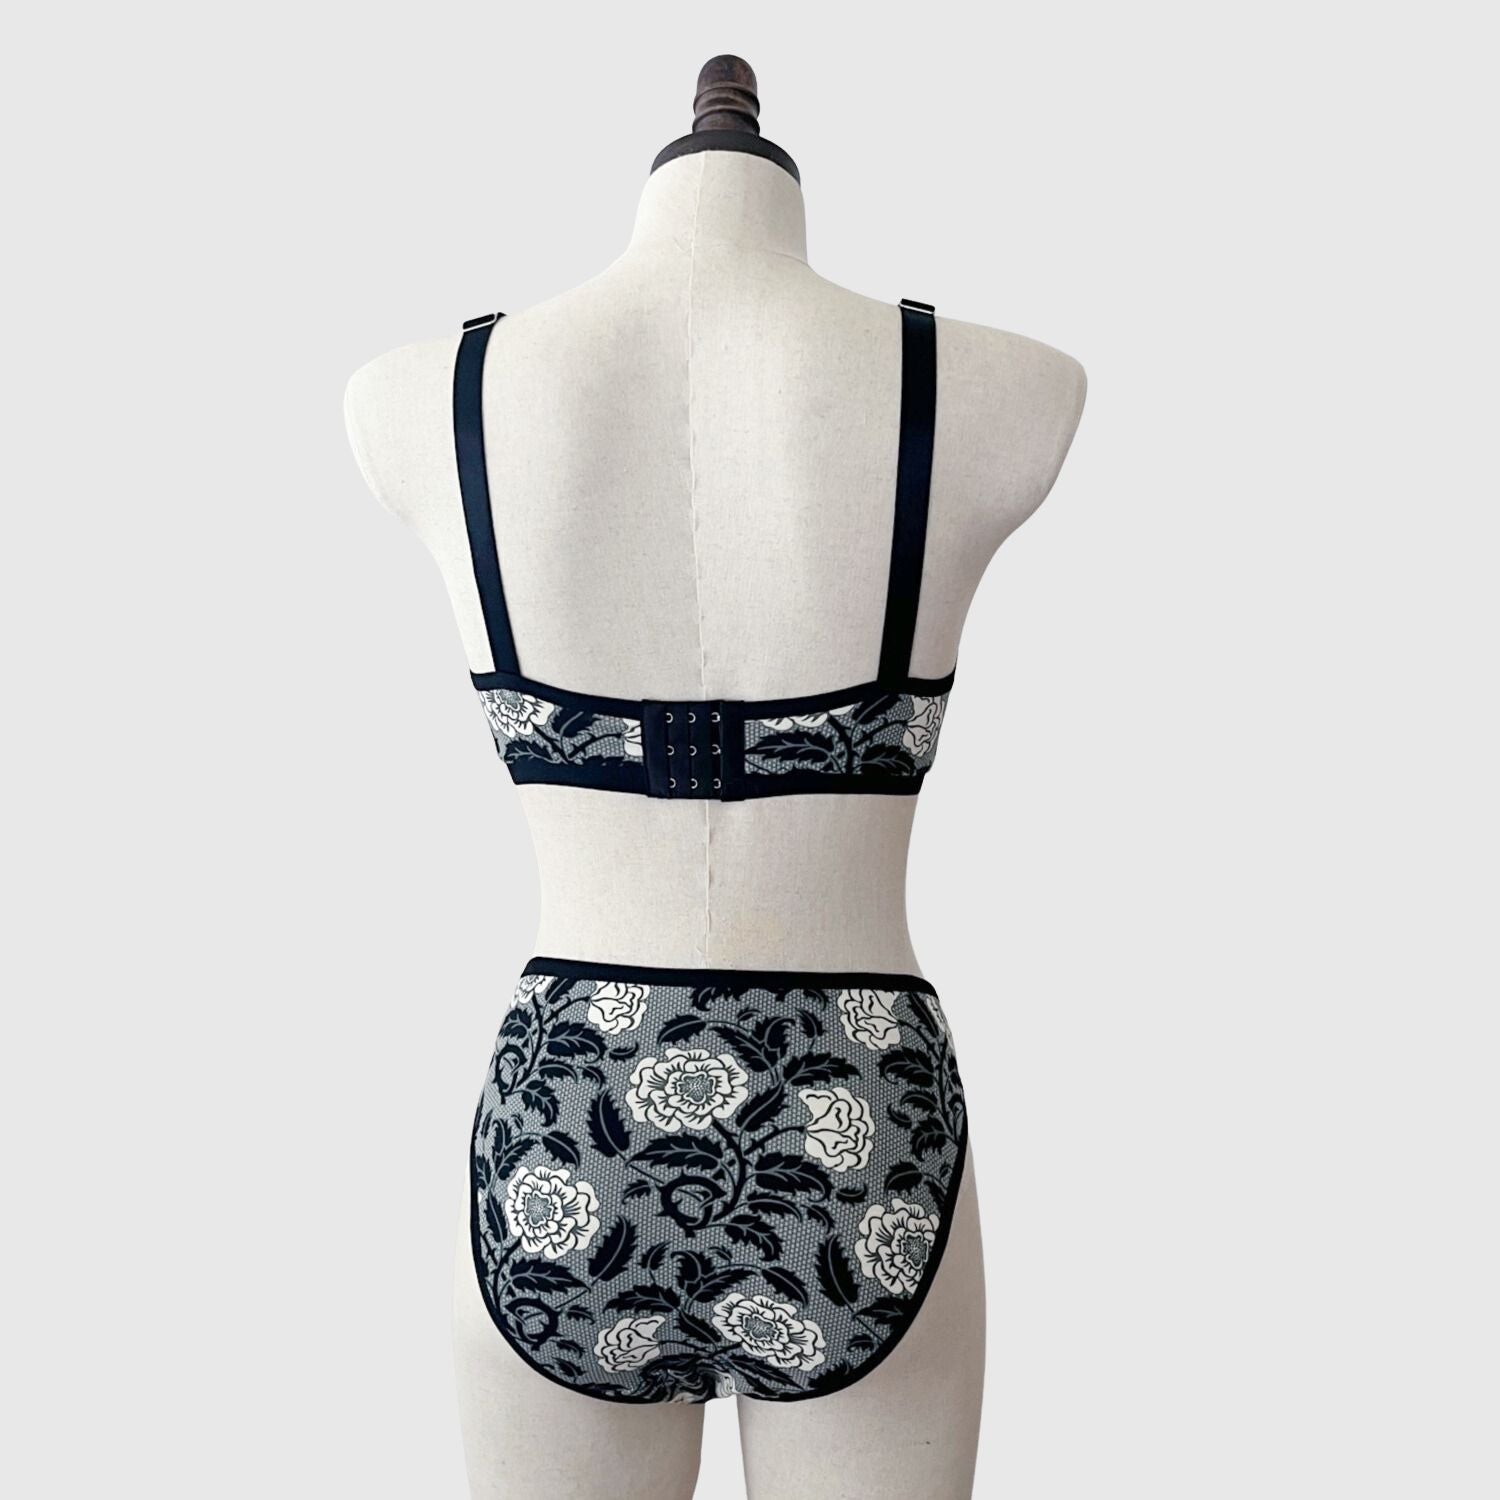 Best organic cotton bra and underwear set | Made in Canada women's lingerie and underwear shop